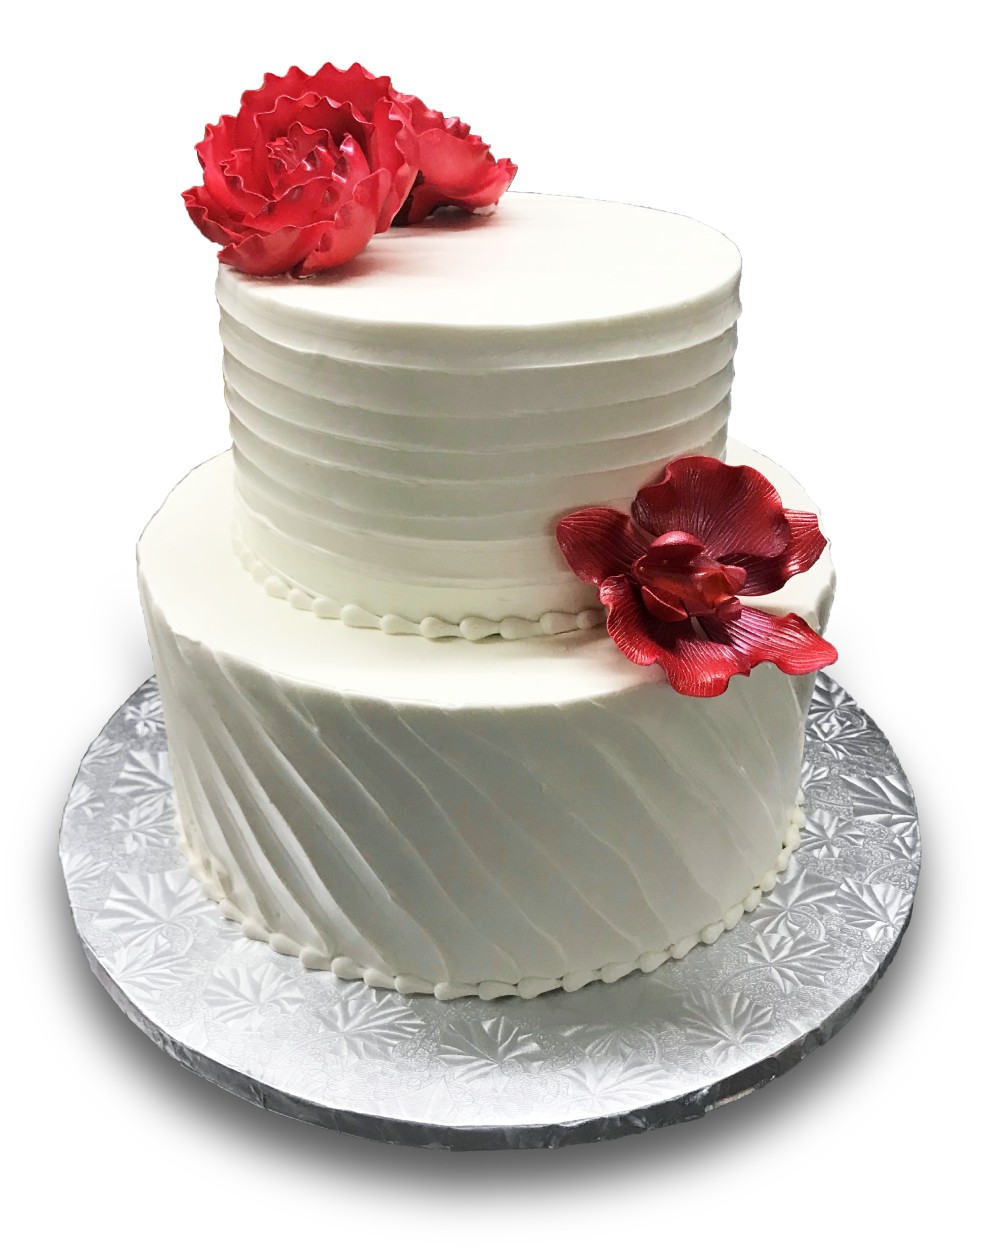 Homespun wedding cake with coral red gumpaste flowers